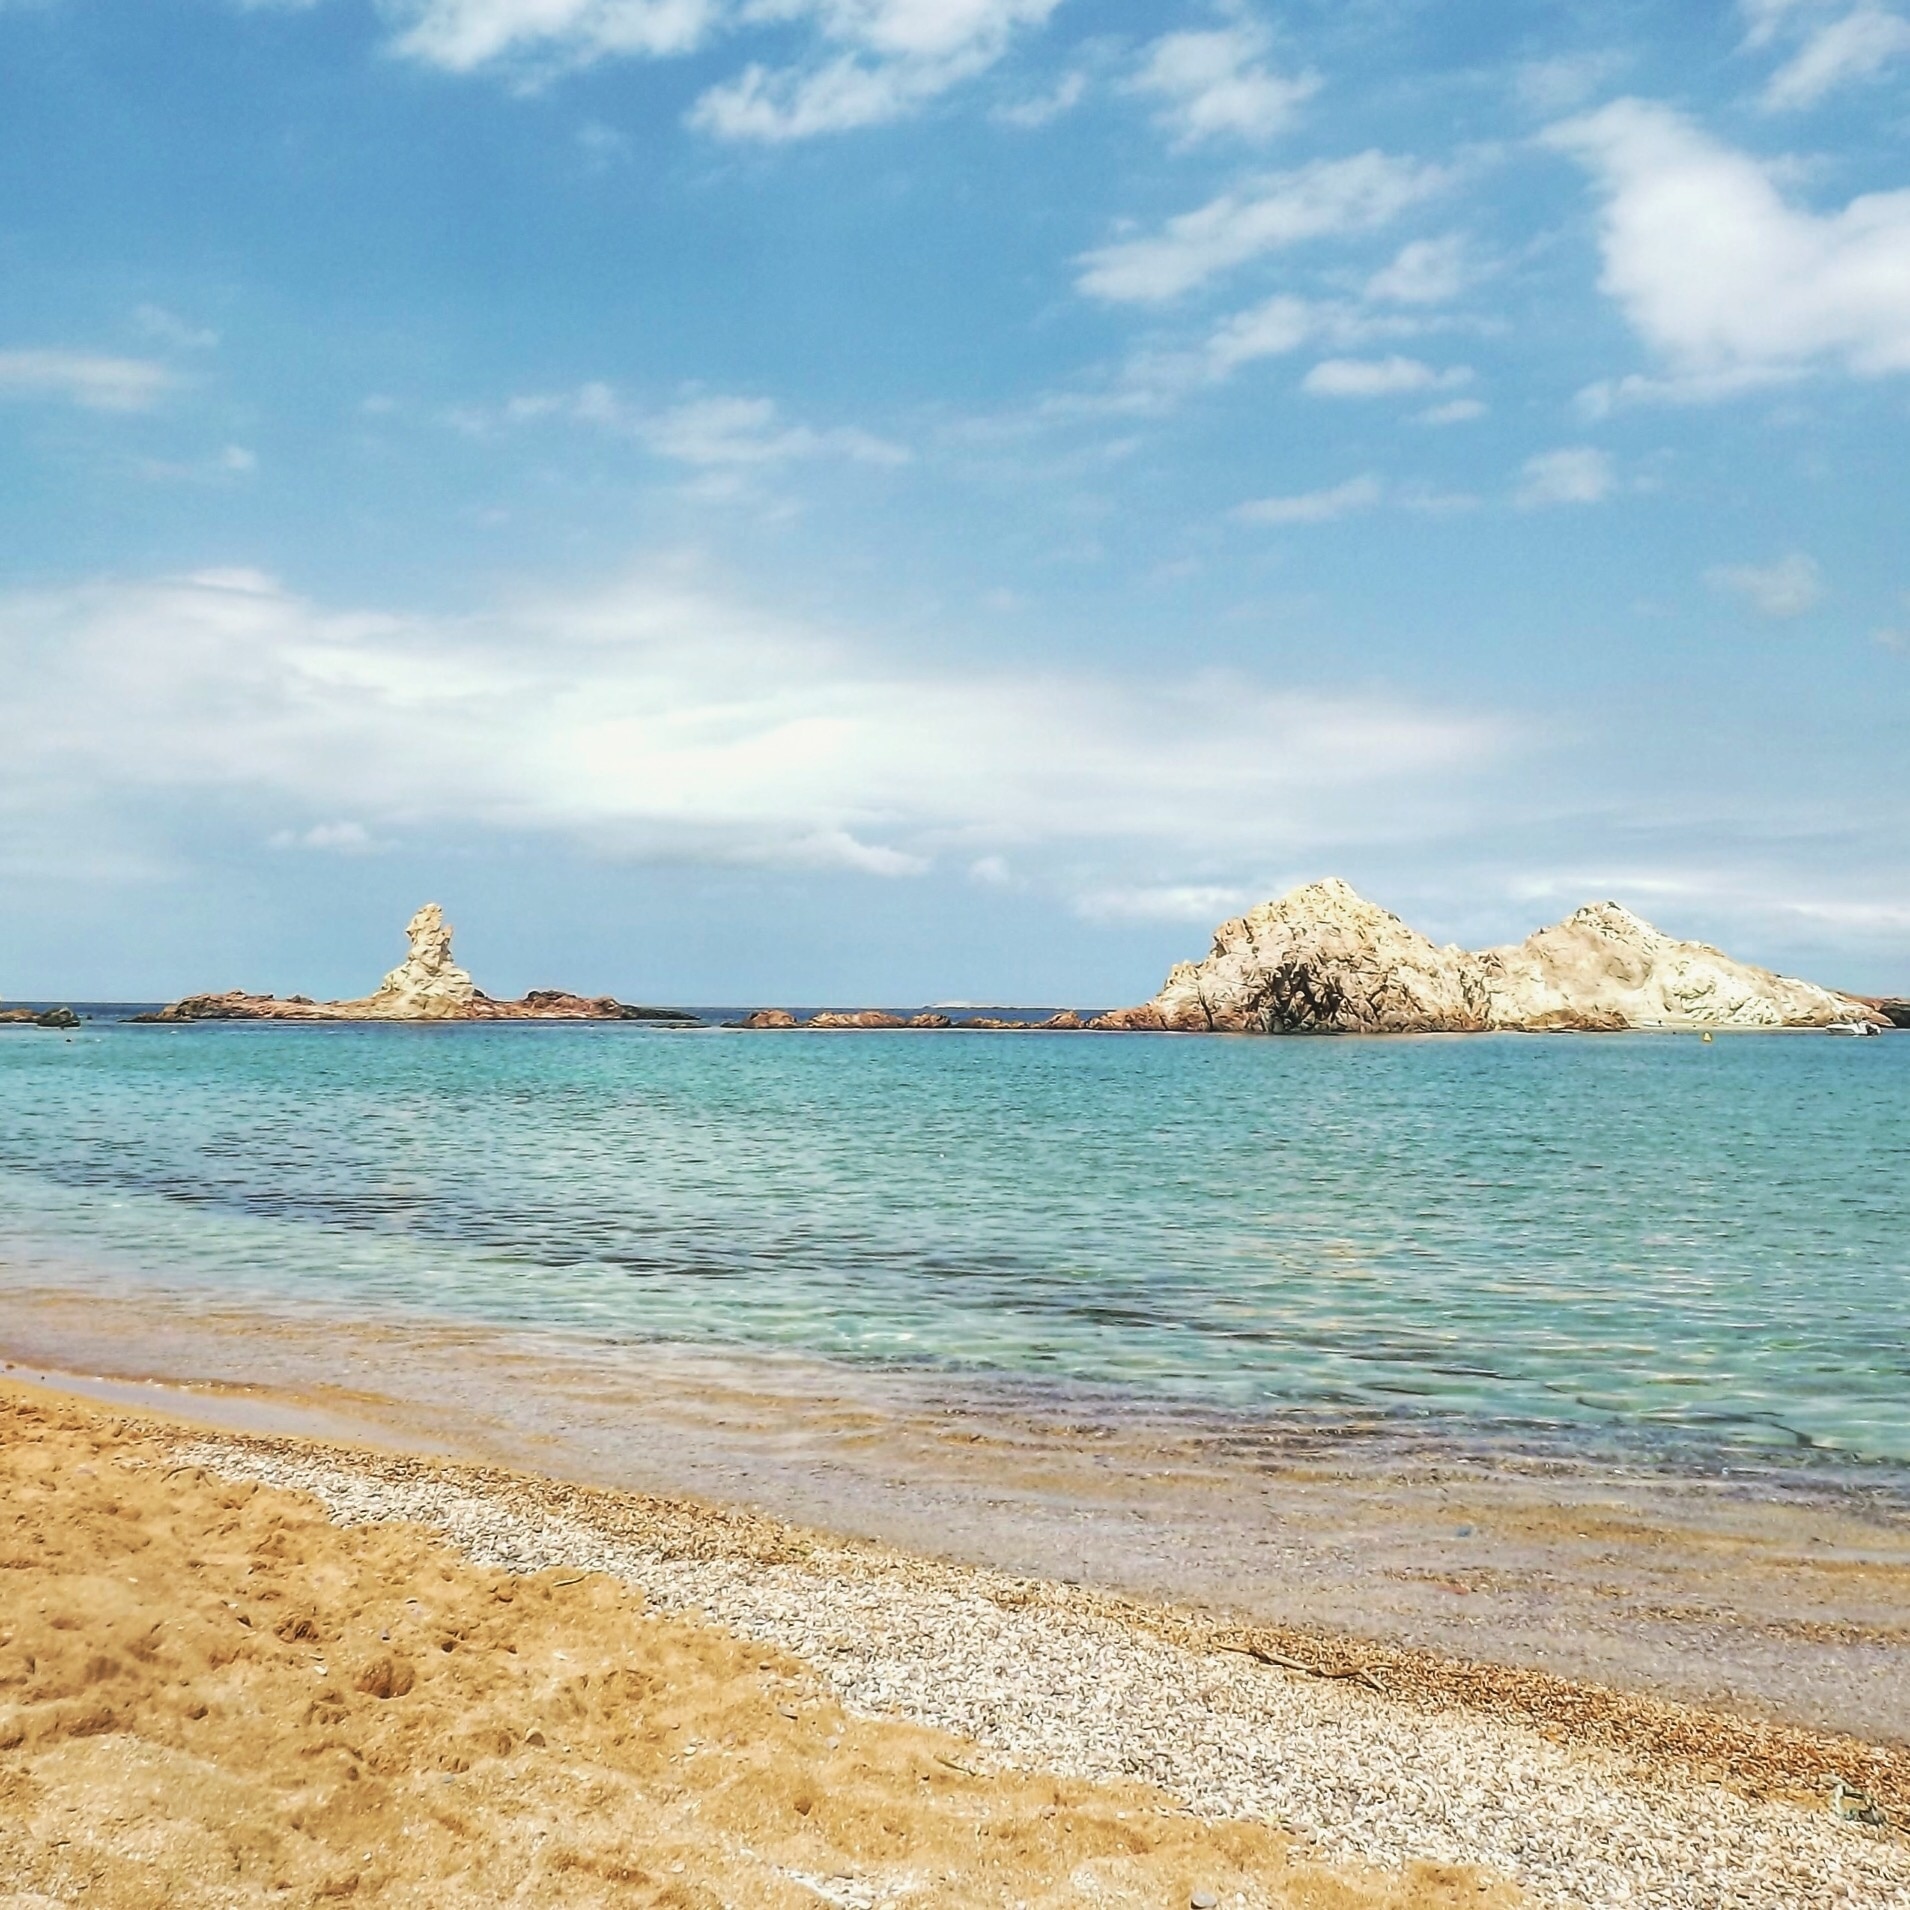 Cala Pregonda in Menorca island (Spain). A perfect place to admire the combination of orange, blue and white colors.